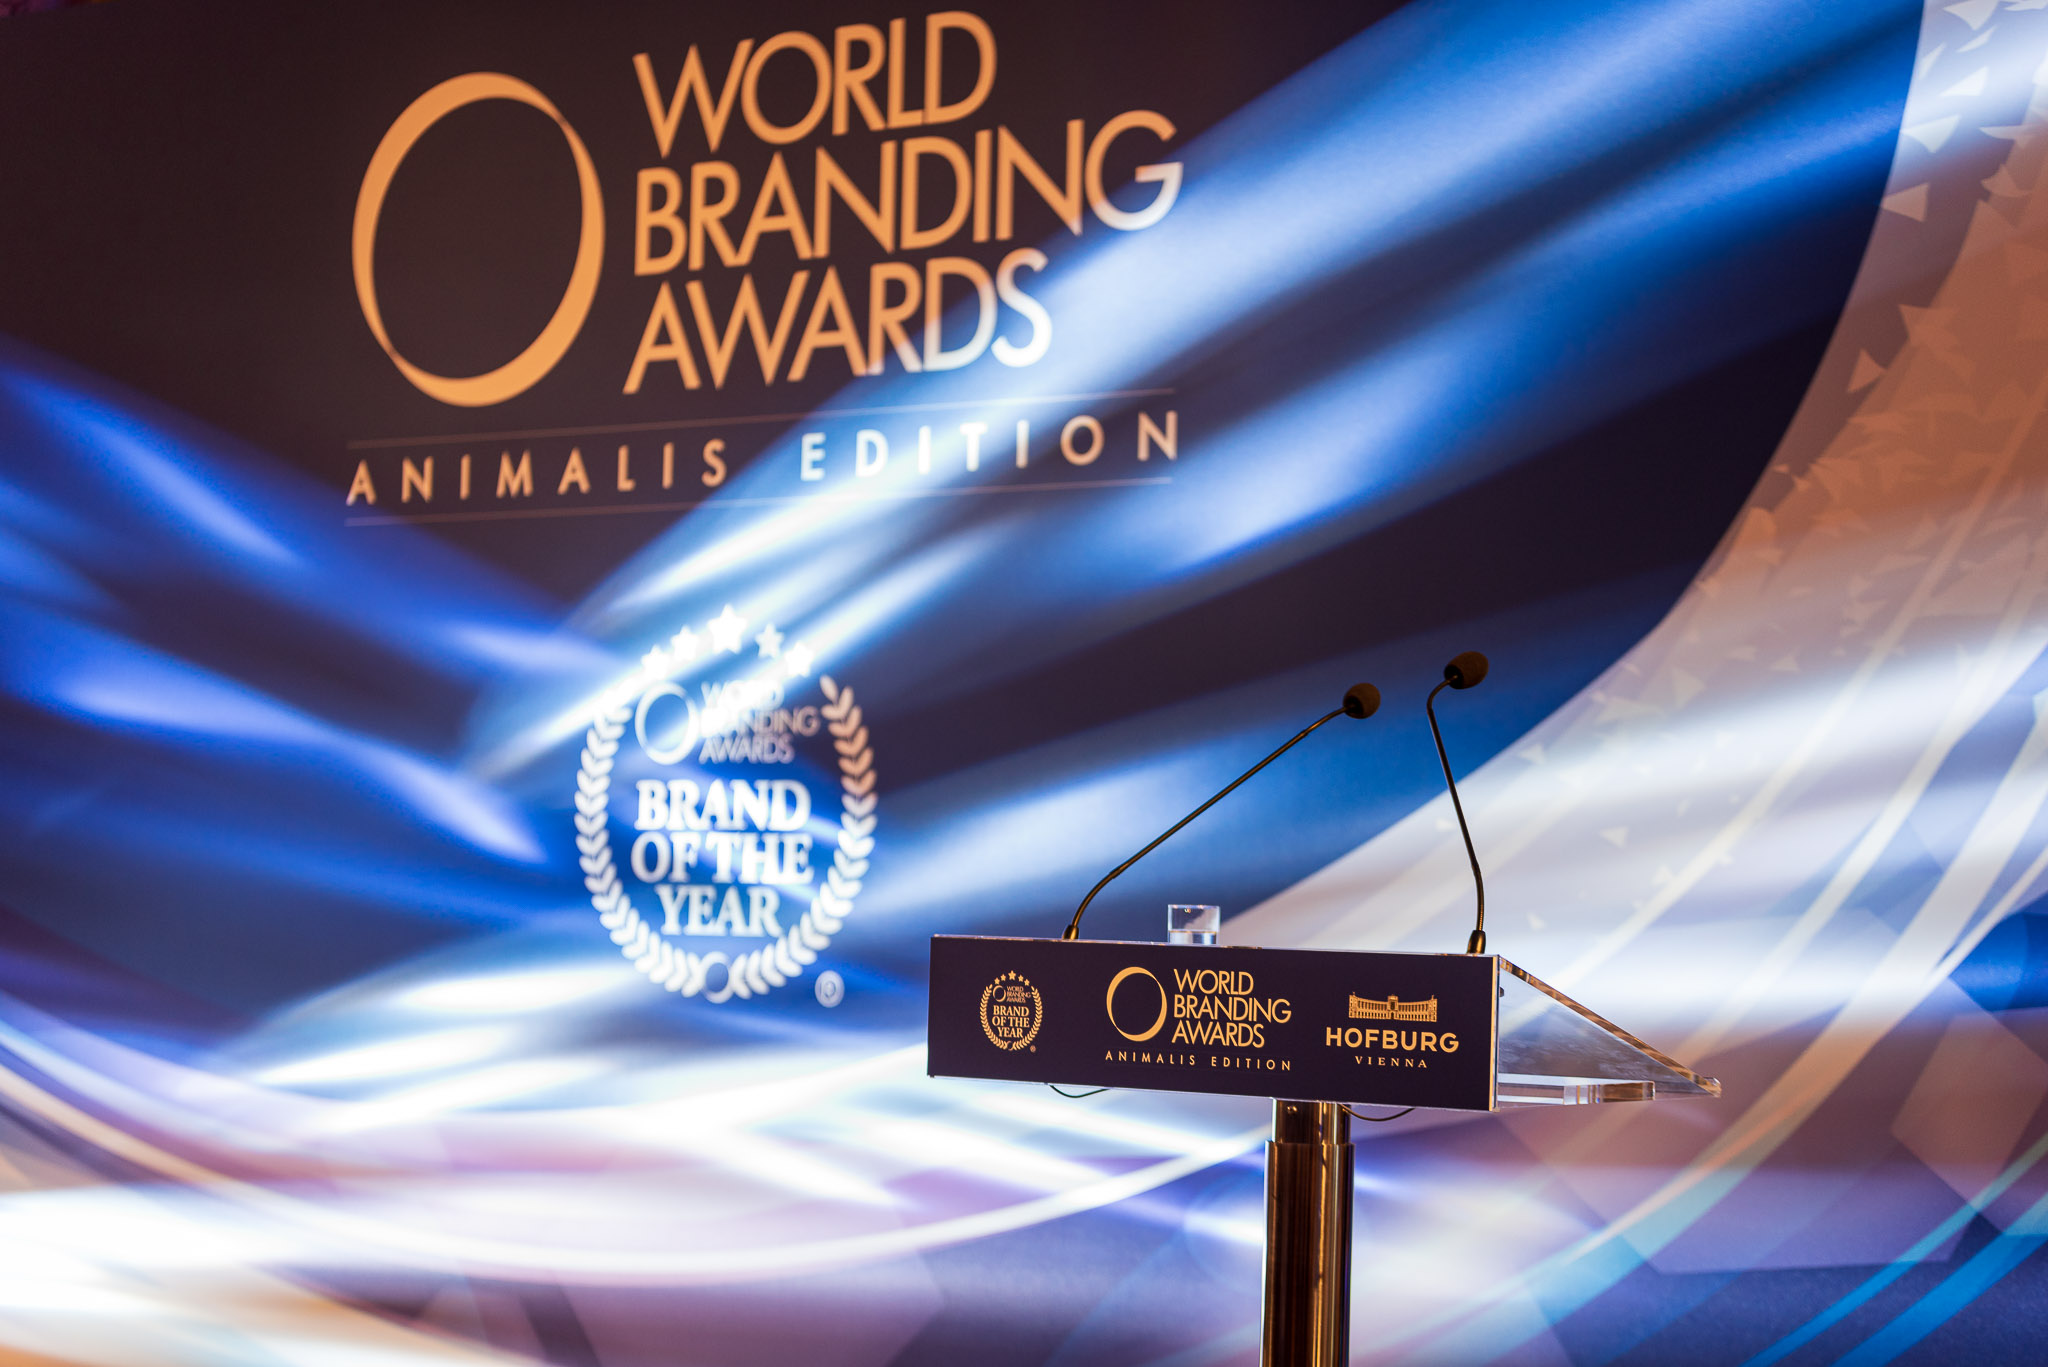 20190703_224434_world_branding_awards_animalis_1209